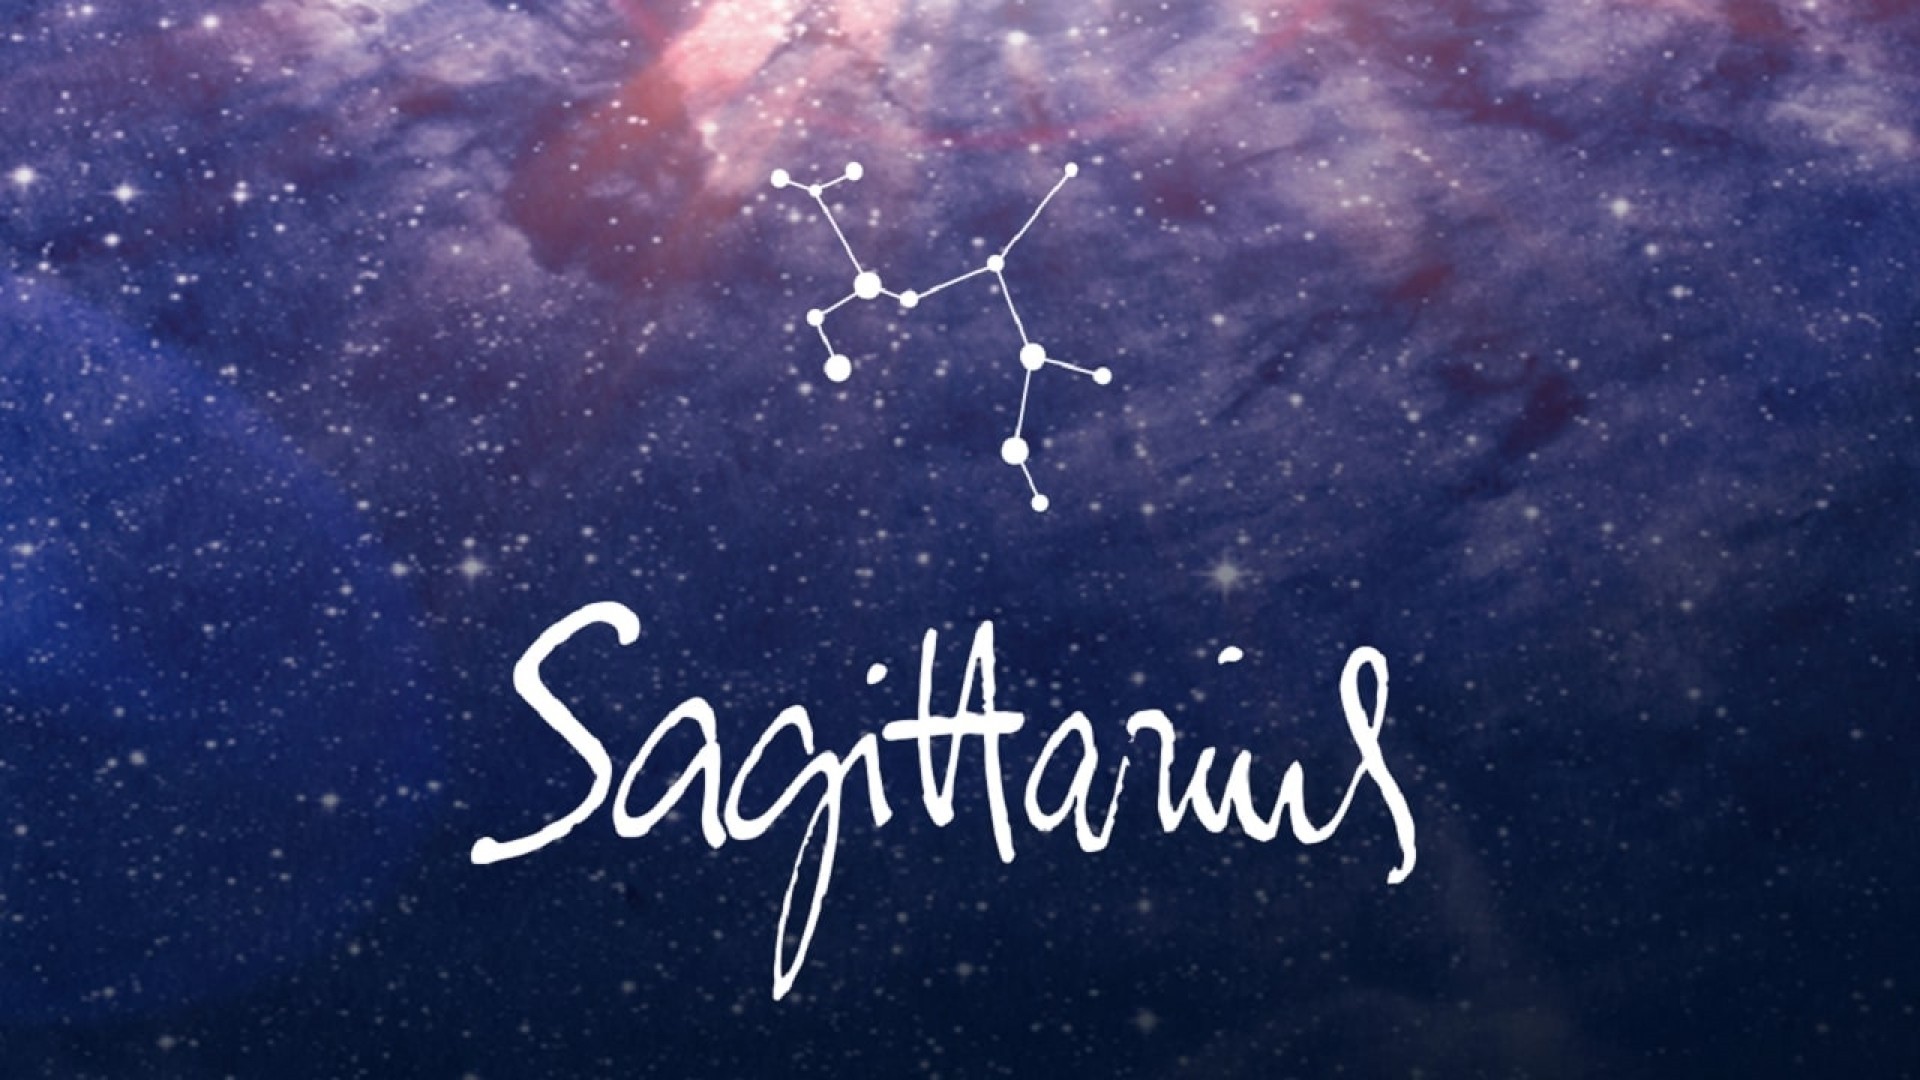 Aesthetic Sagittarius Wallpapers